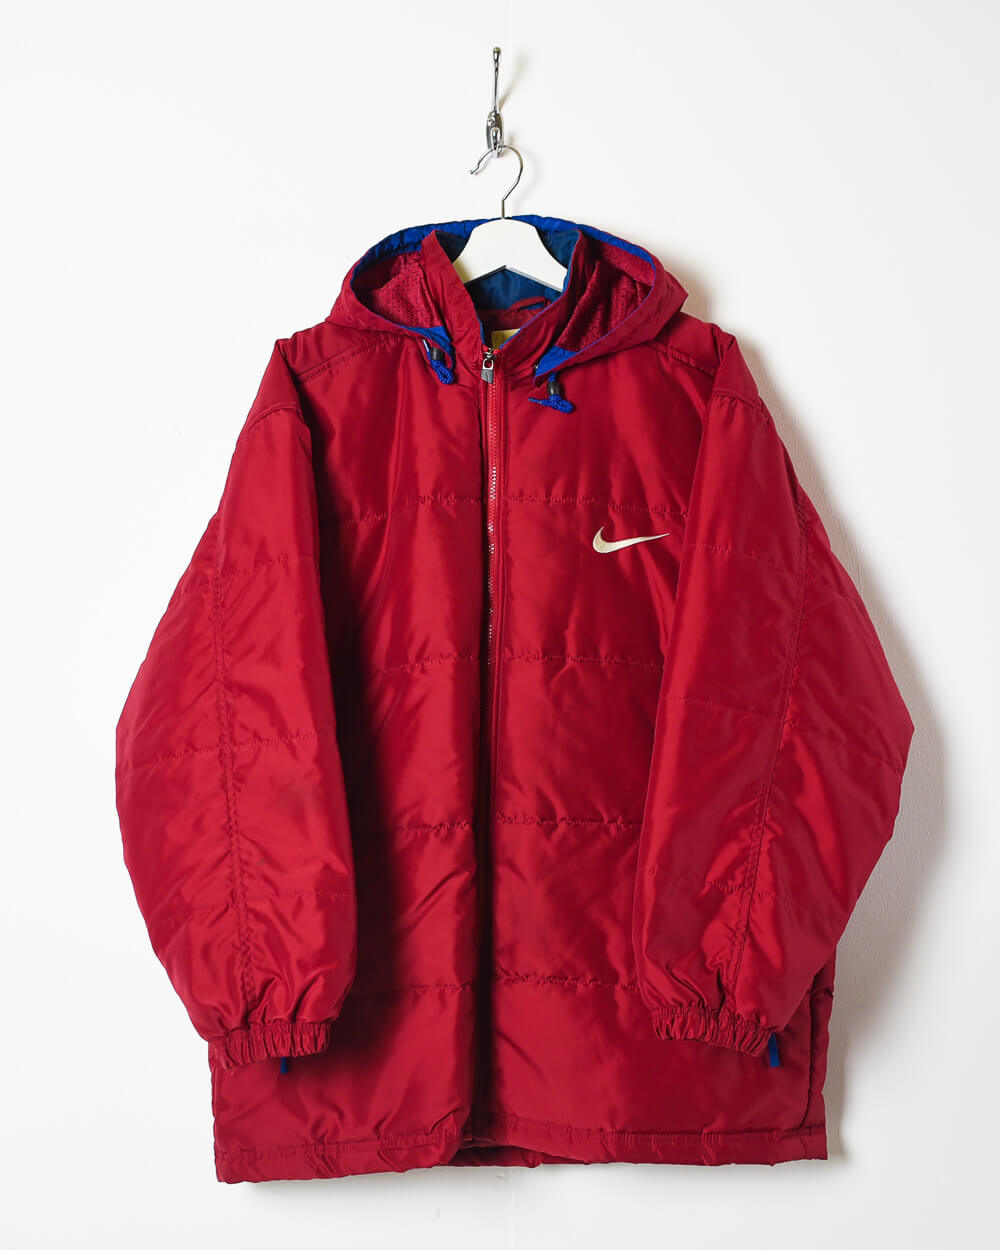 Red Nike Hooded Puffer Jacket - Medium